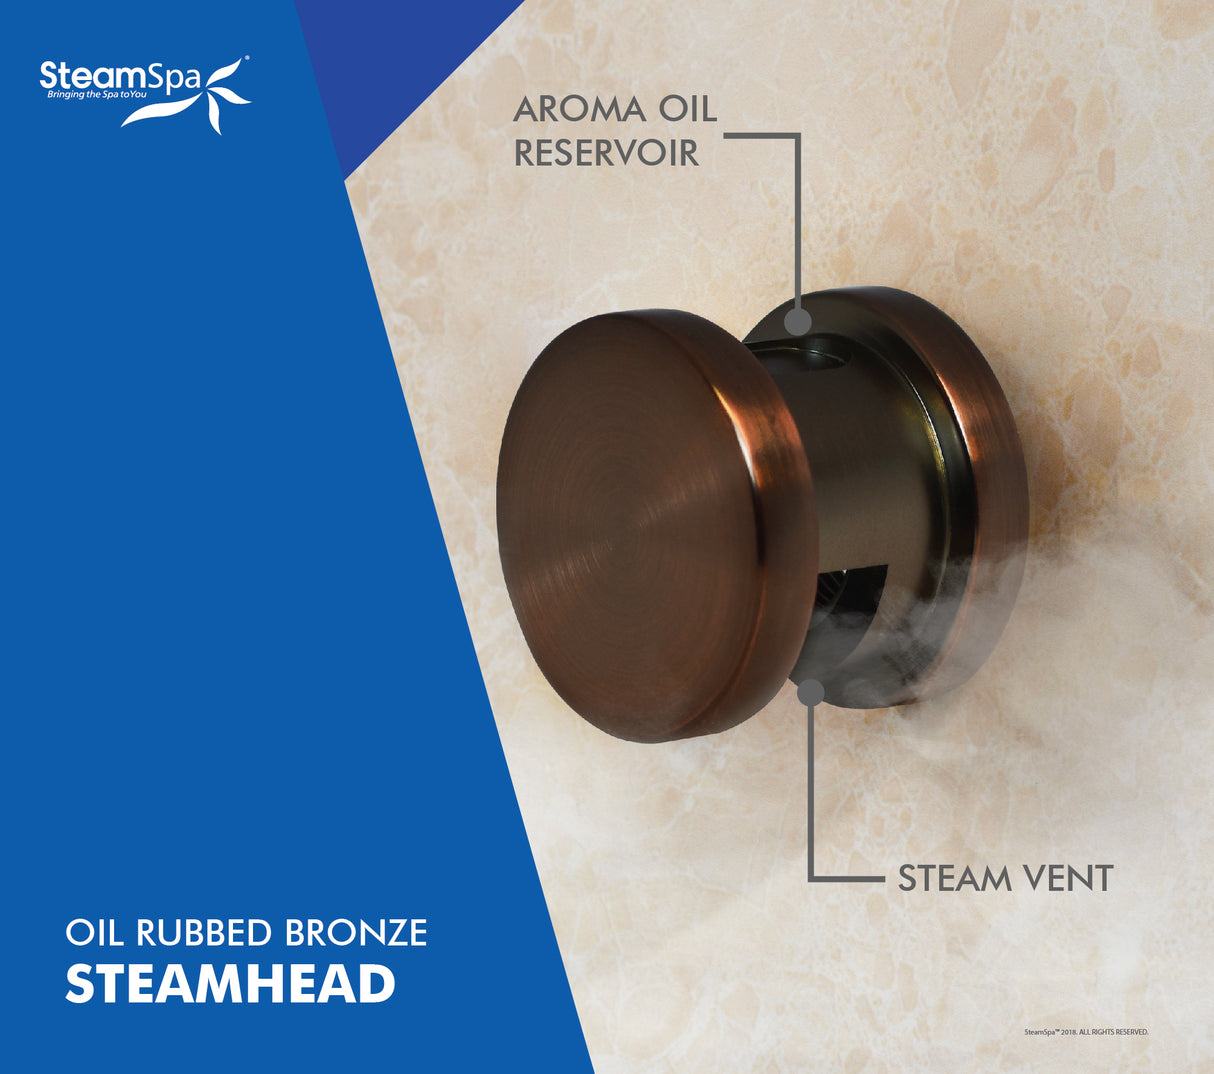 SteamSpa Indulgence 12 KW QuickStart Acu-Steam Bath Generator Package in Oil Rubbed Bronze INT1200OB